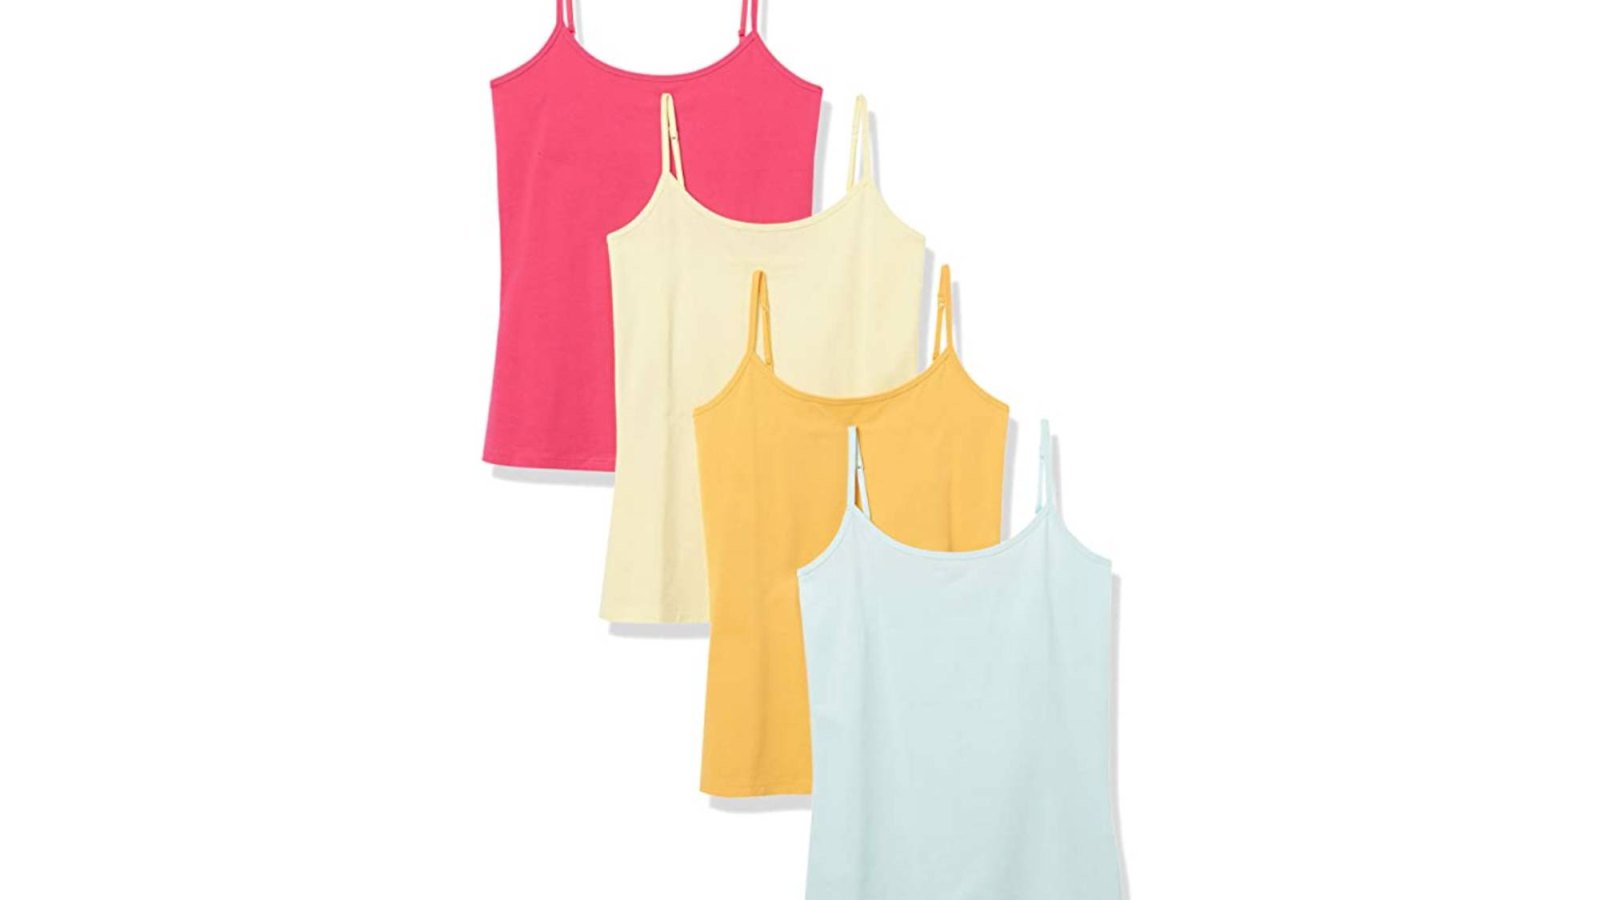 Amazon Essentials Women's 4-Pack Slim-Fit Camisole